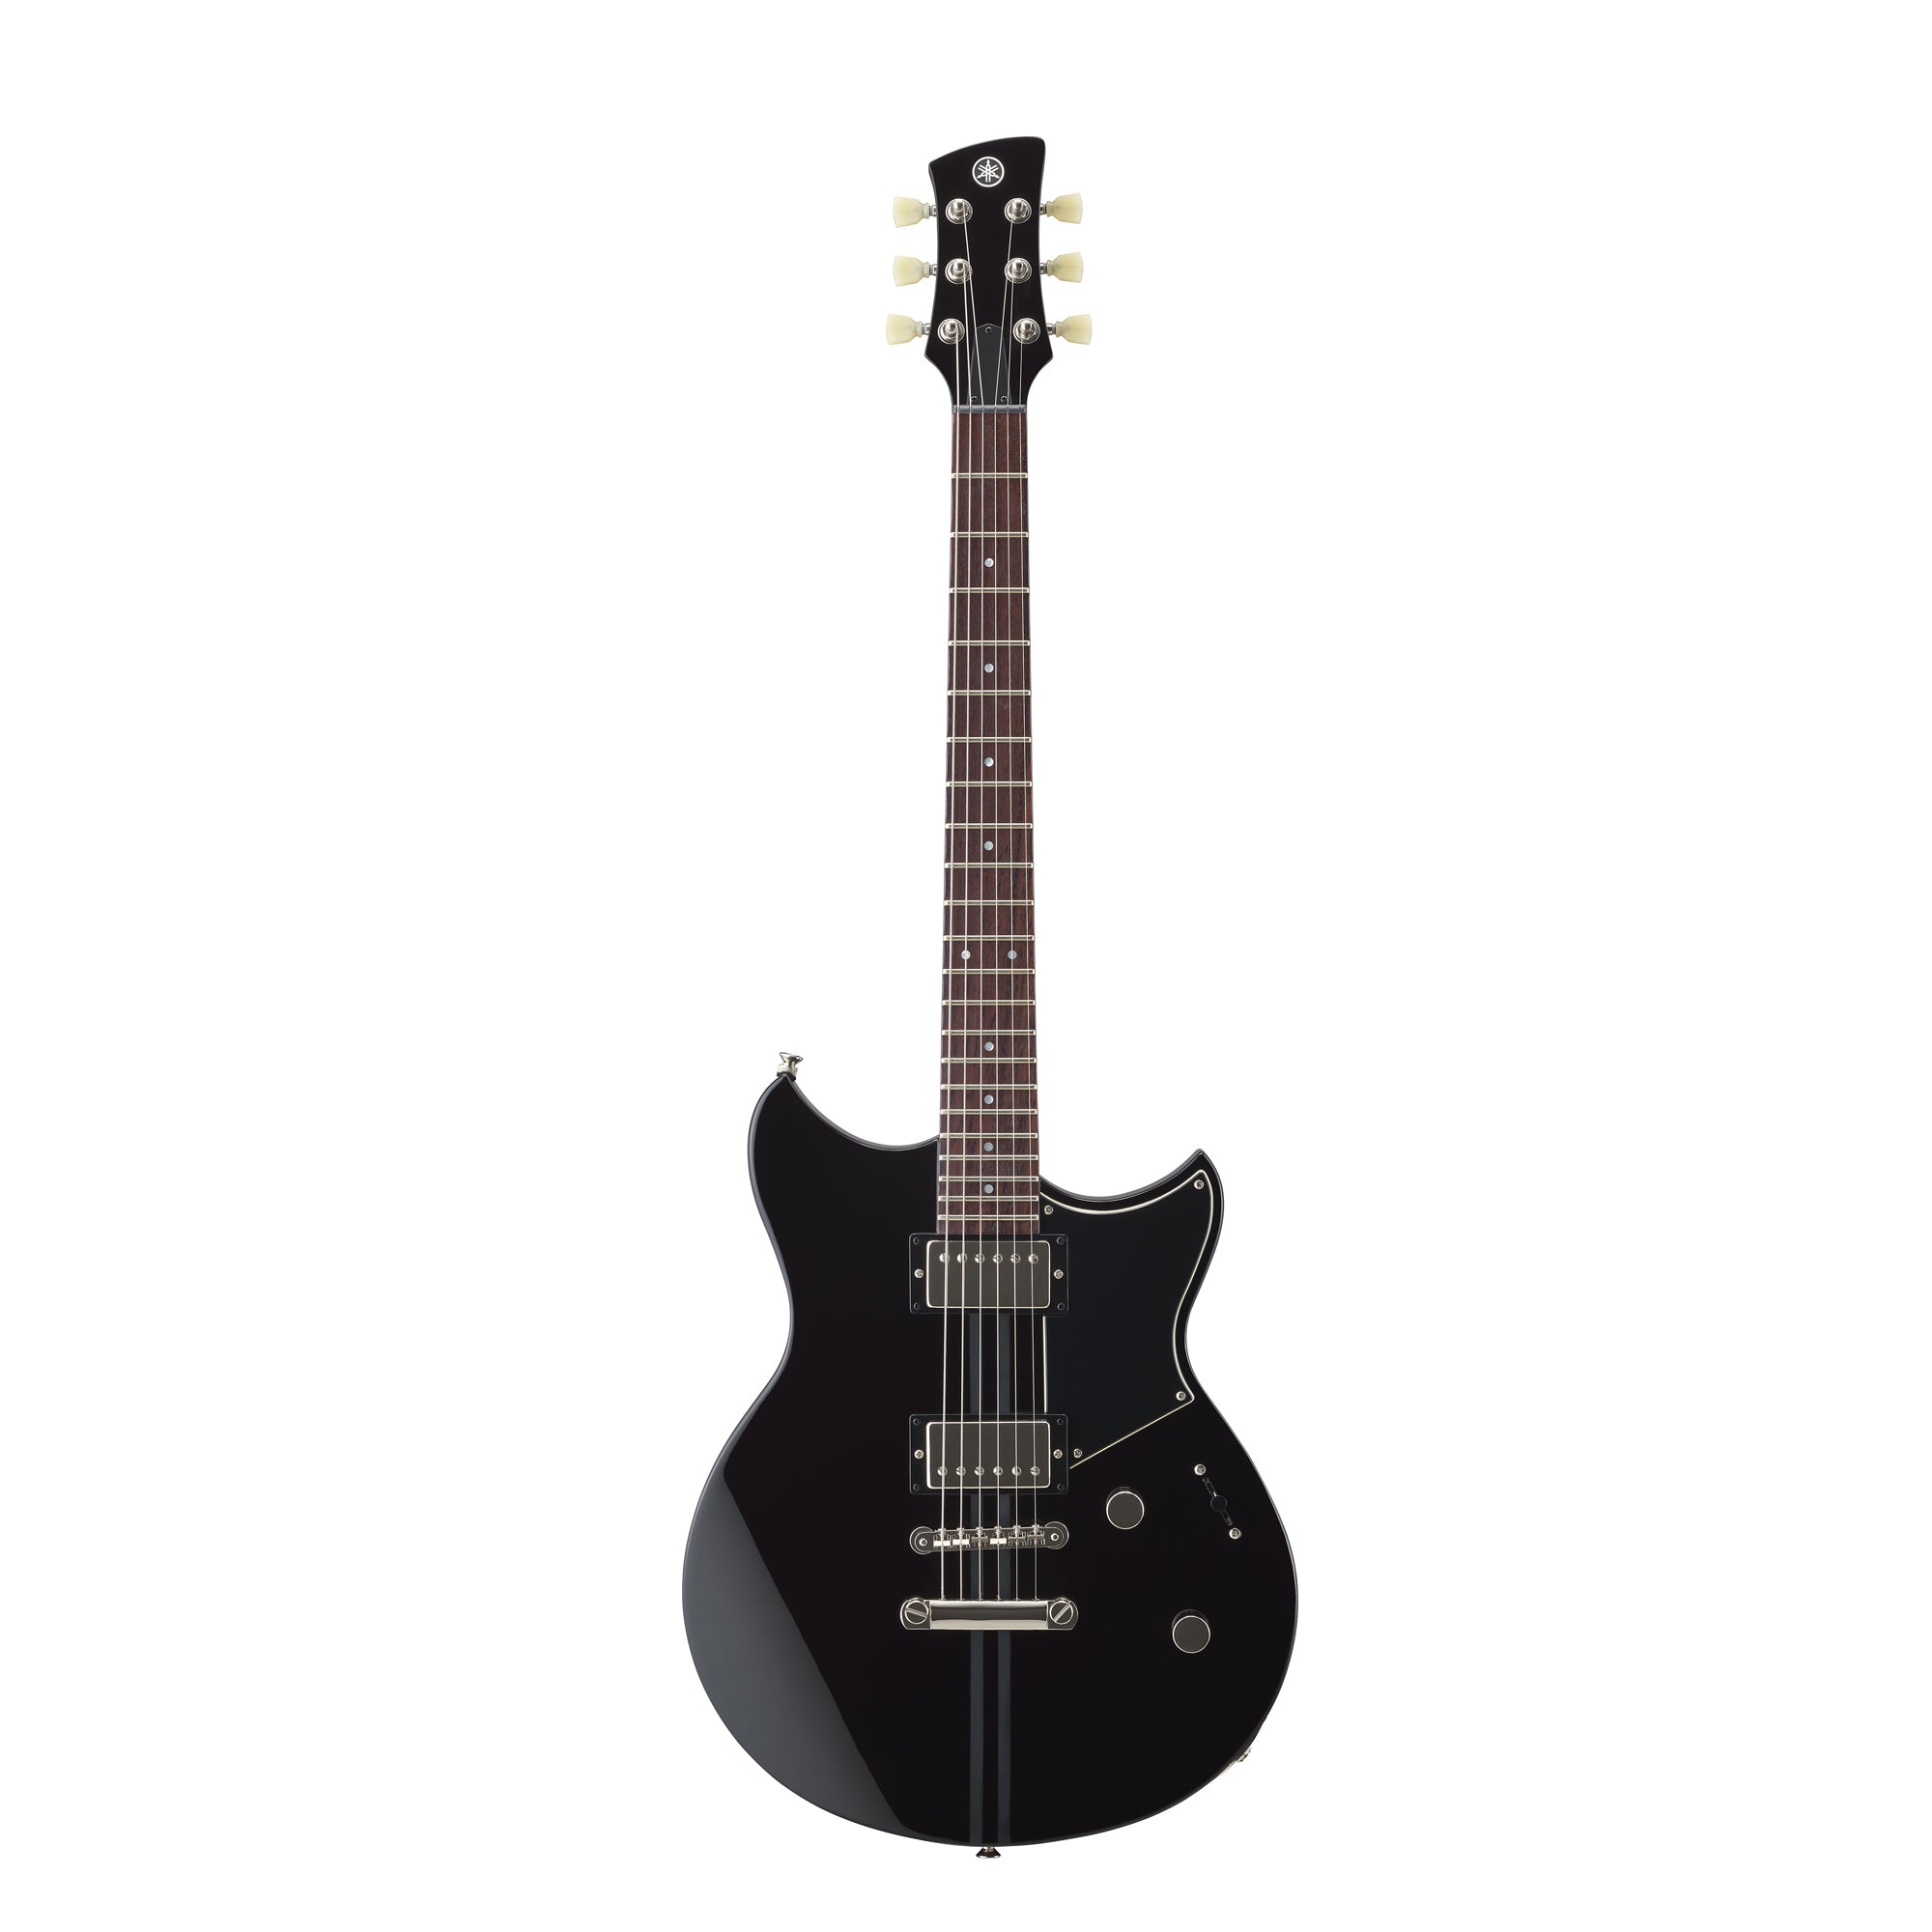 Yamaha Revstar Element Electric Guitar